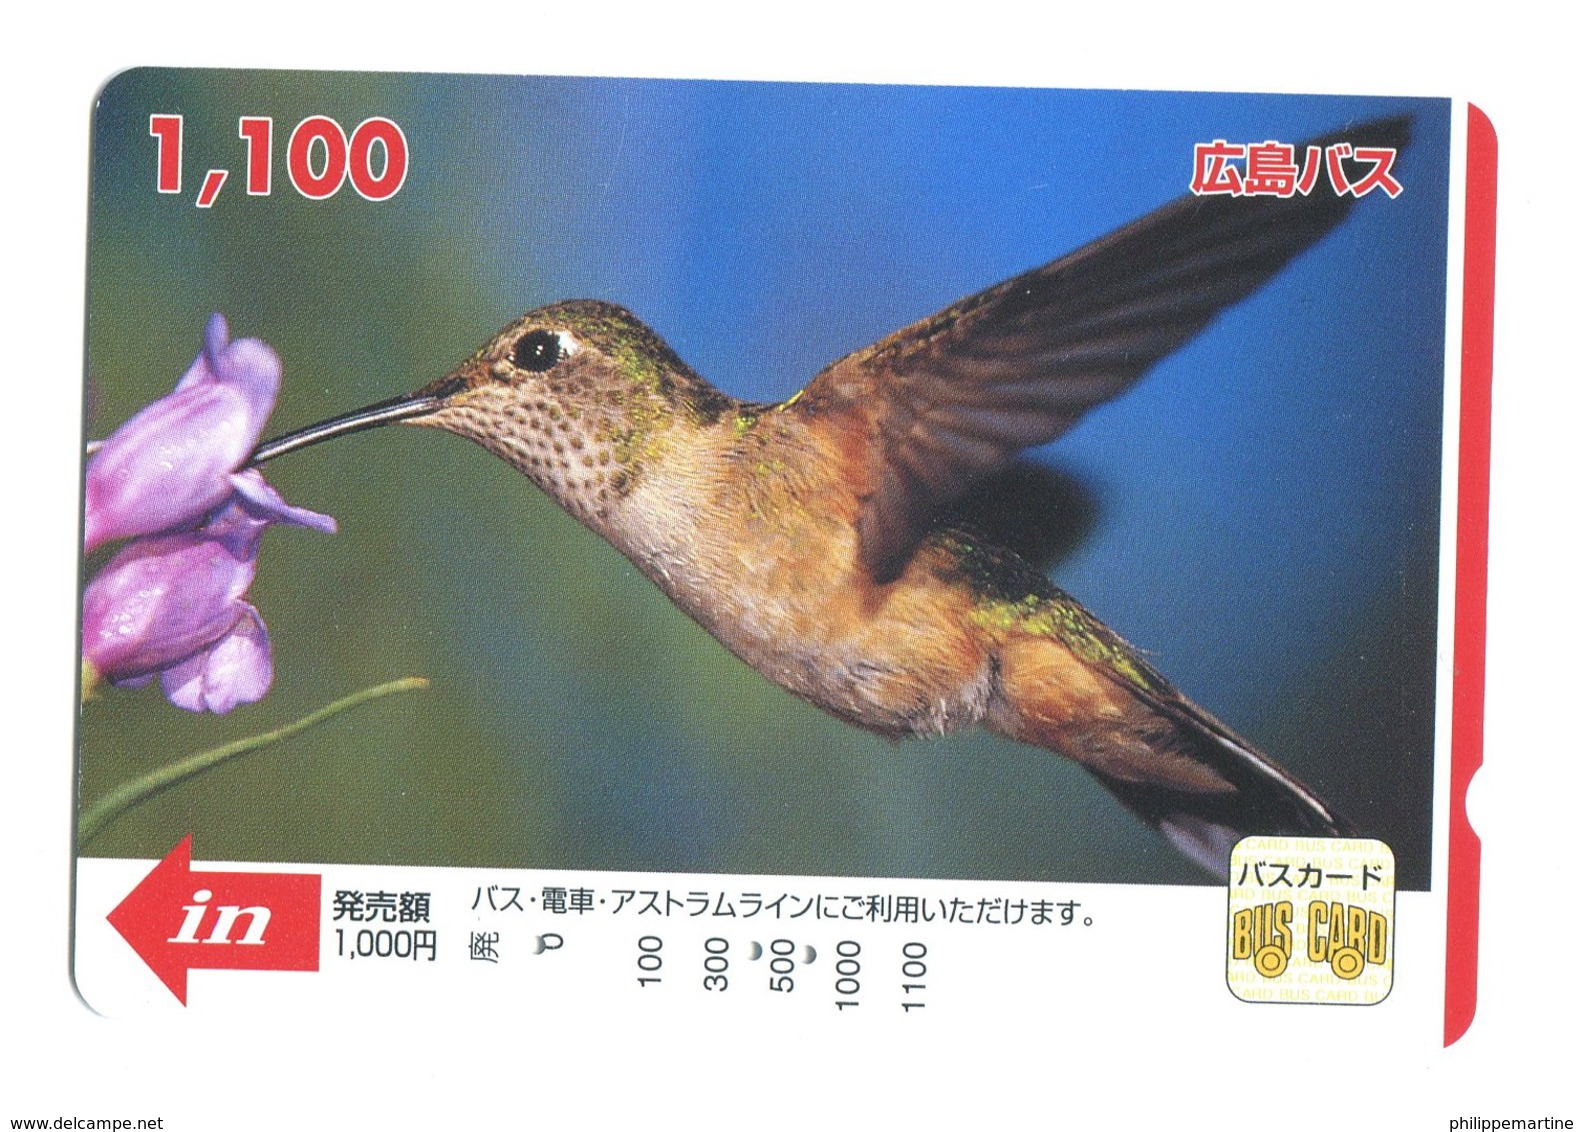 Japon - Bus Card : Colibri - Mondo